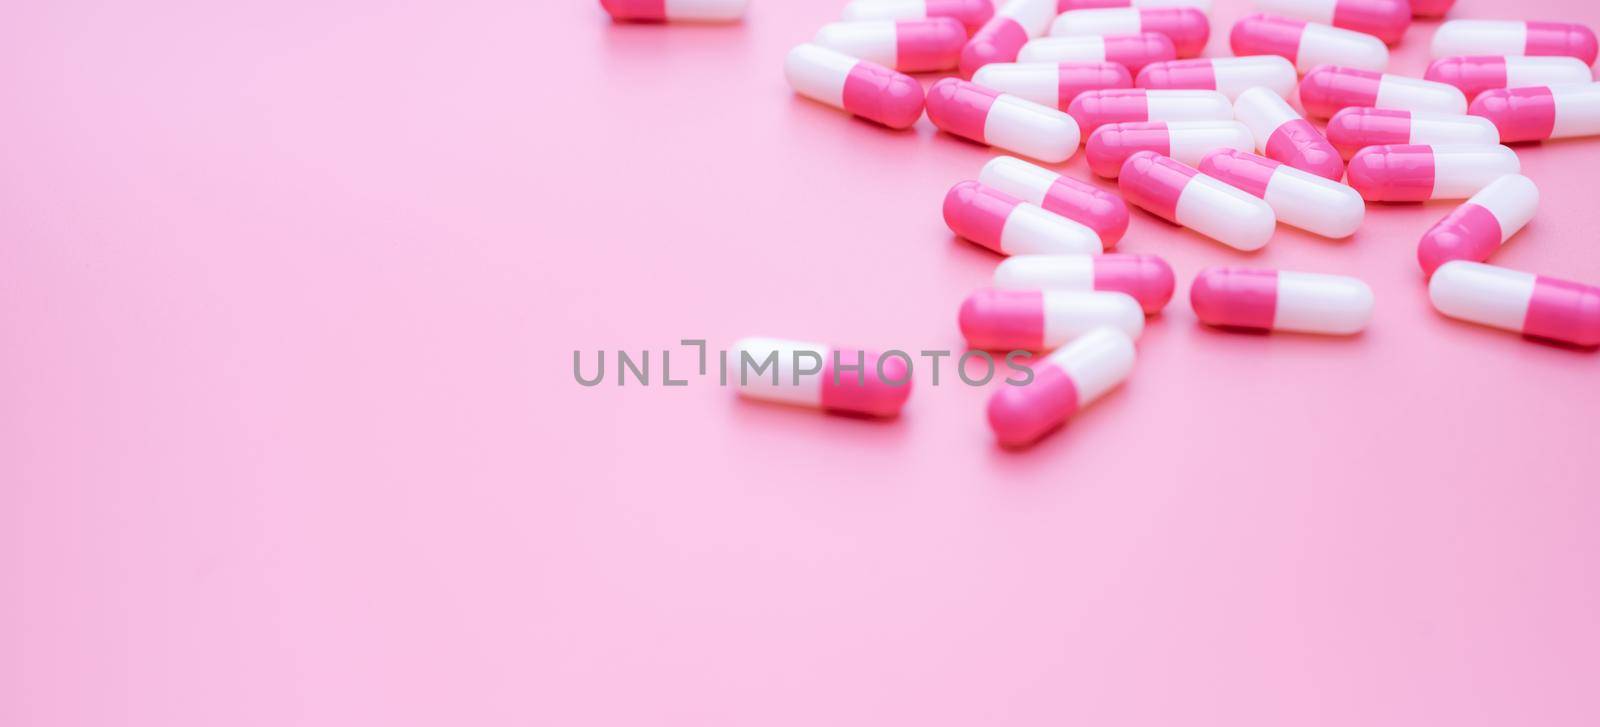 Pink-white antibiotic capsule pills on pink background. Antibiotic drug resistance. Capsule pills spread on pink background. Medication use in hospital. Prescription drugs. Antibiotic drug smart use.